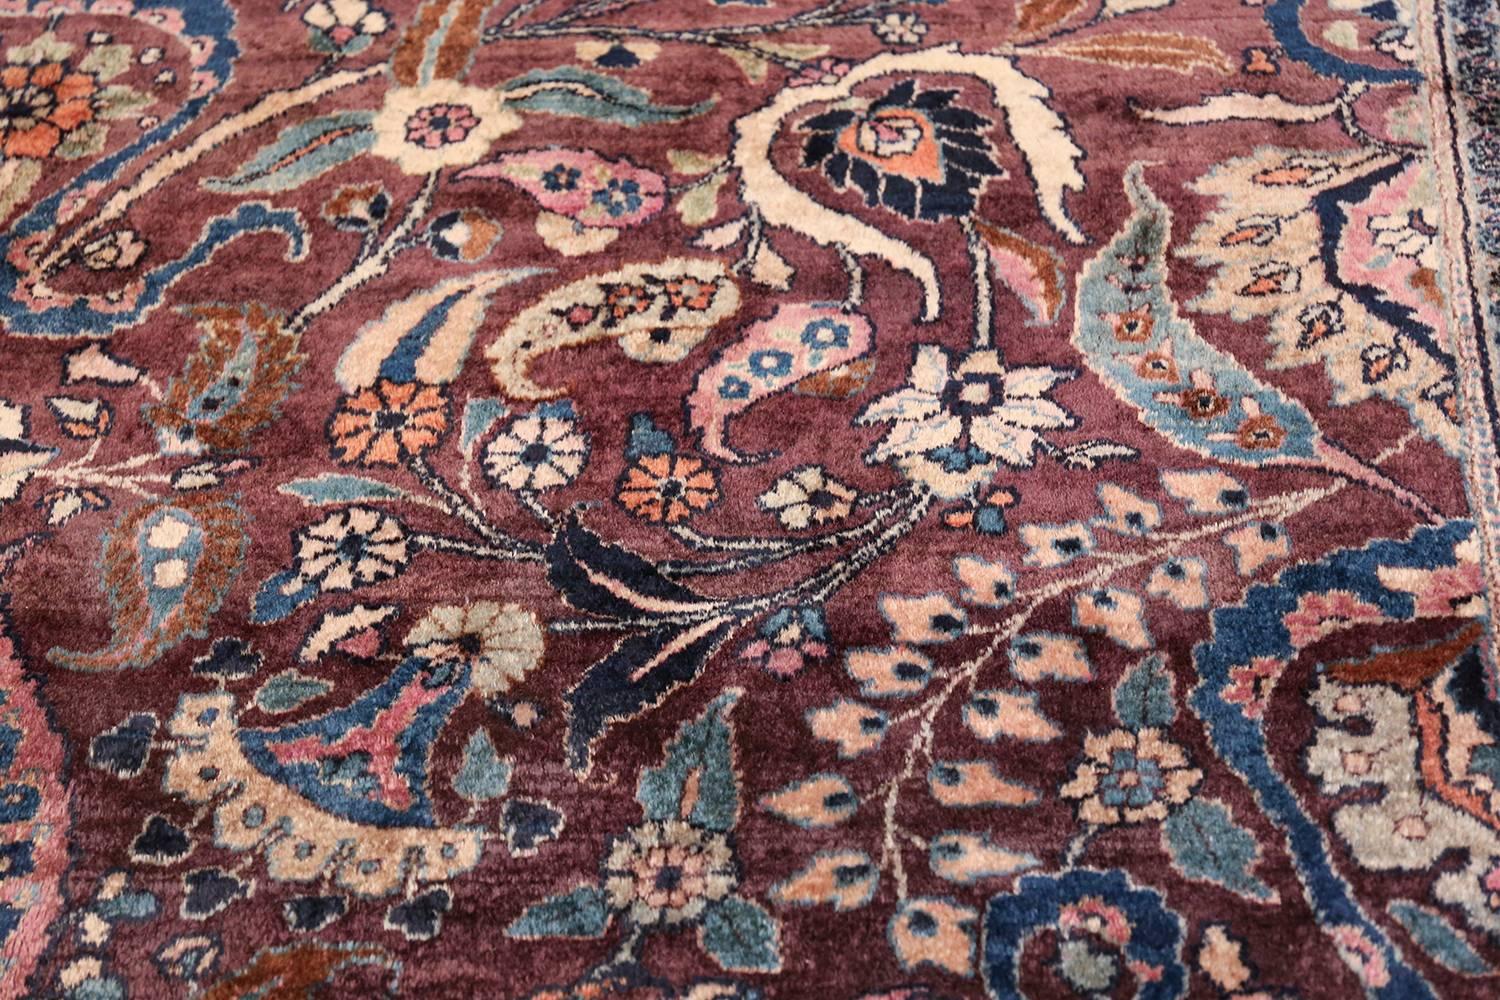 Wool Antique Persian Khorassan Rug. Size: 10' x 14' 7